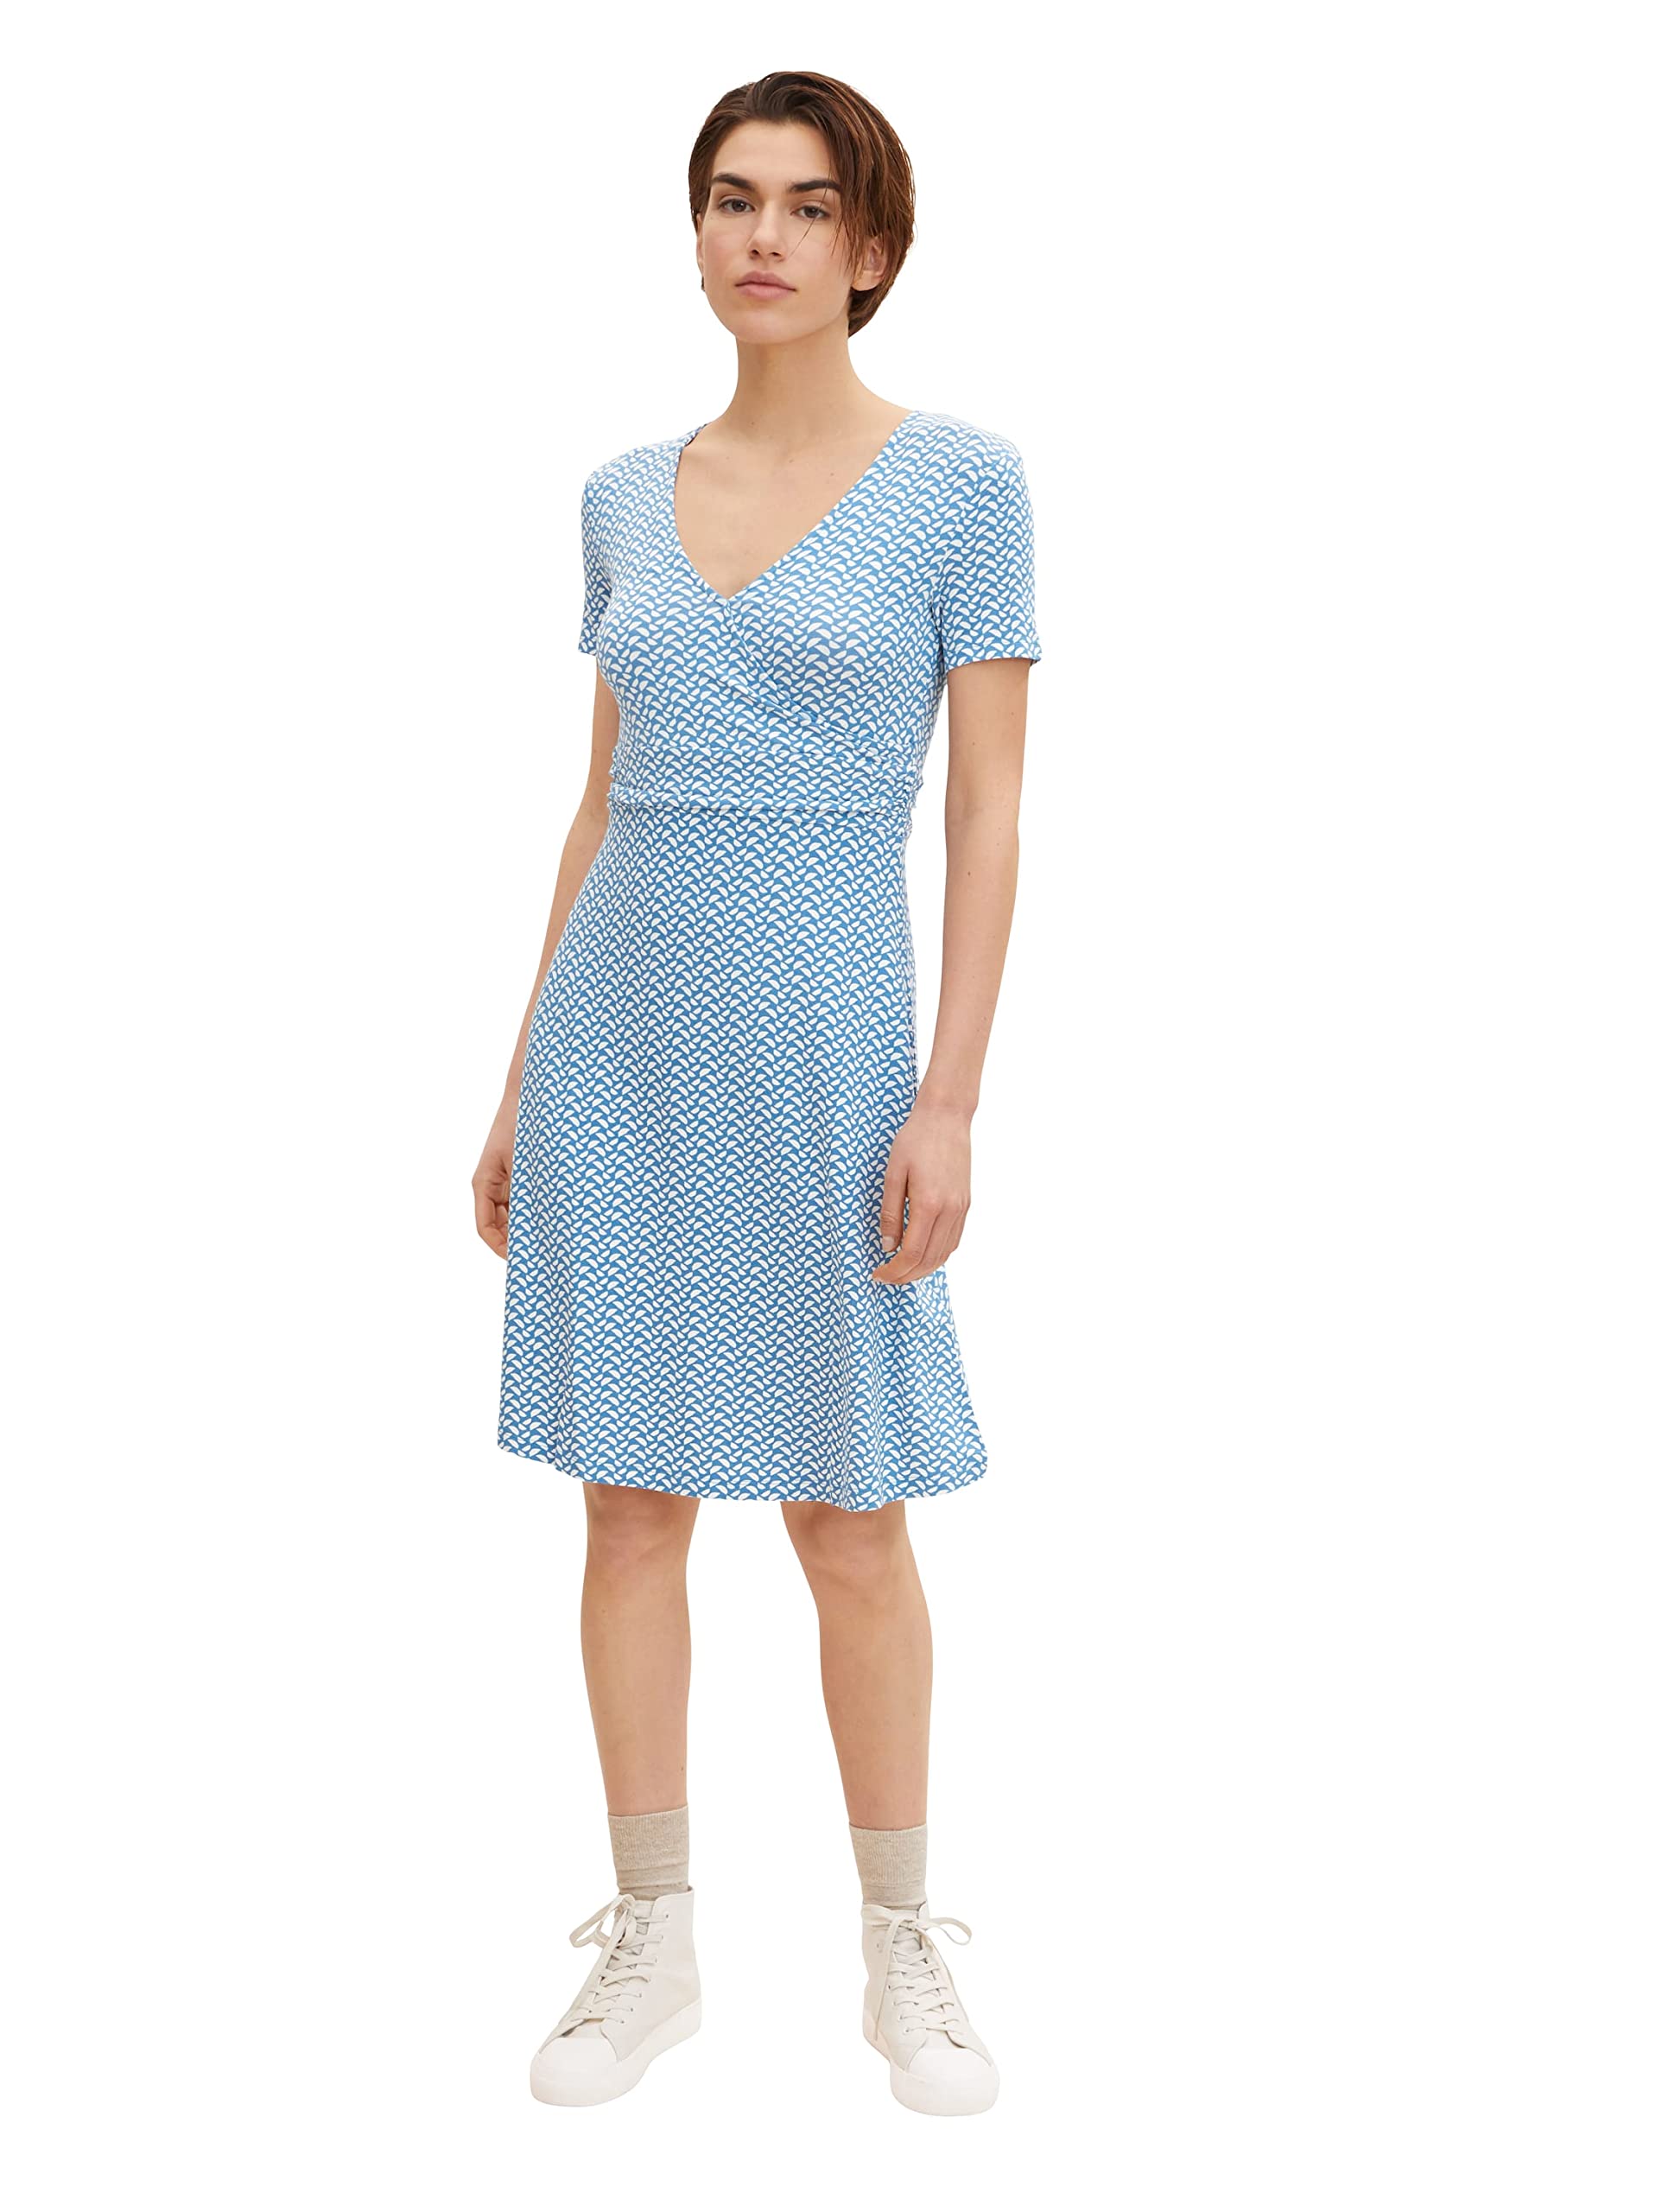 TOM TAILOR Damen Kleid in Wickeloptik 1032059, 29526 - Blue Minimal Design, 42